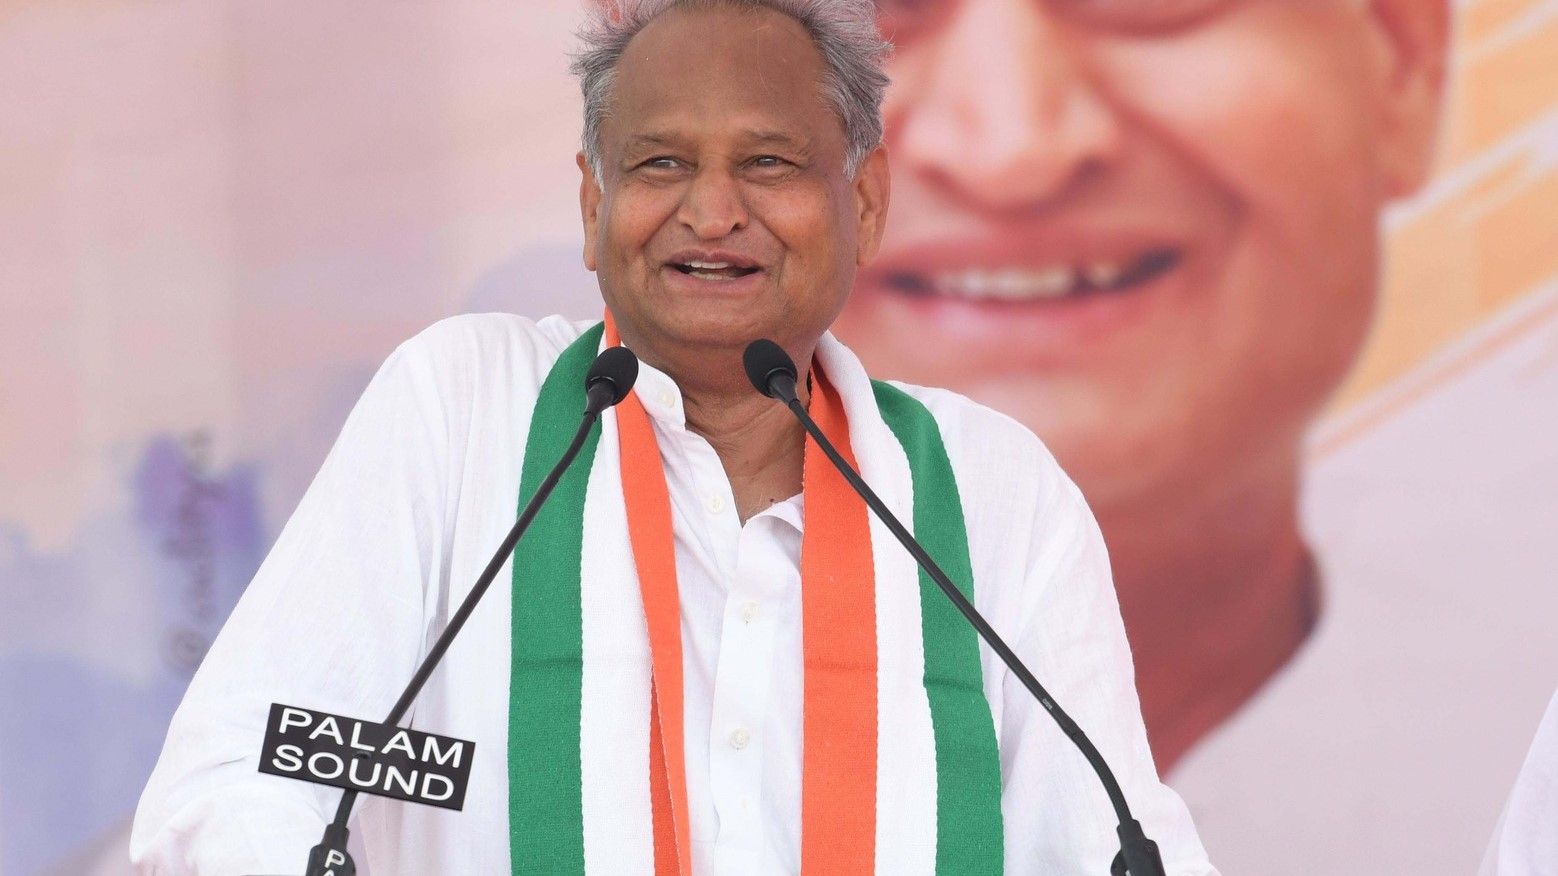 Mallikarjun Kharge and Congress President election 2022 - Satya Hindi